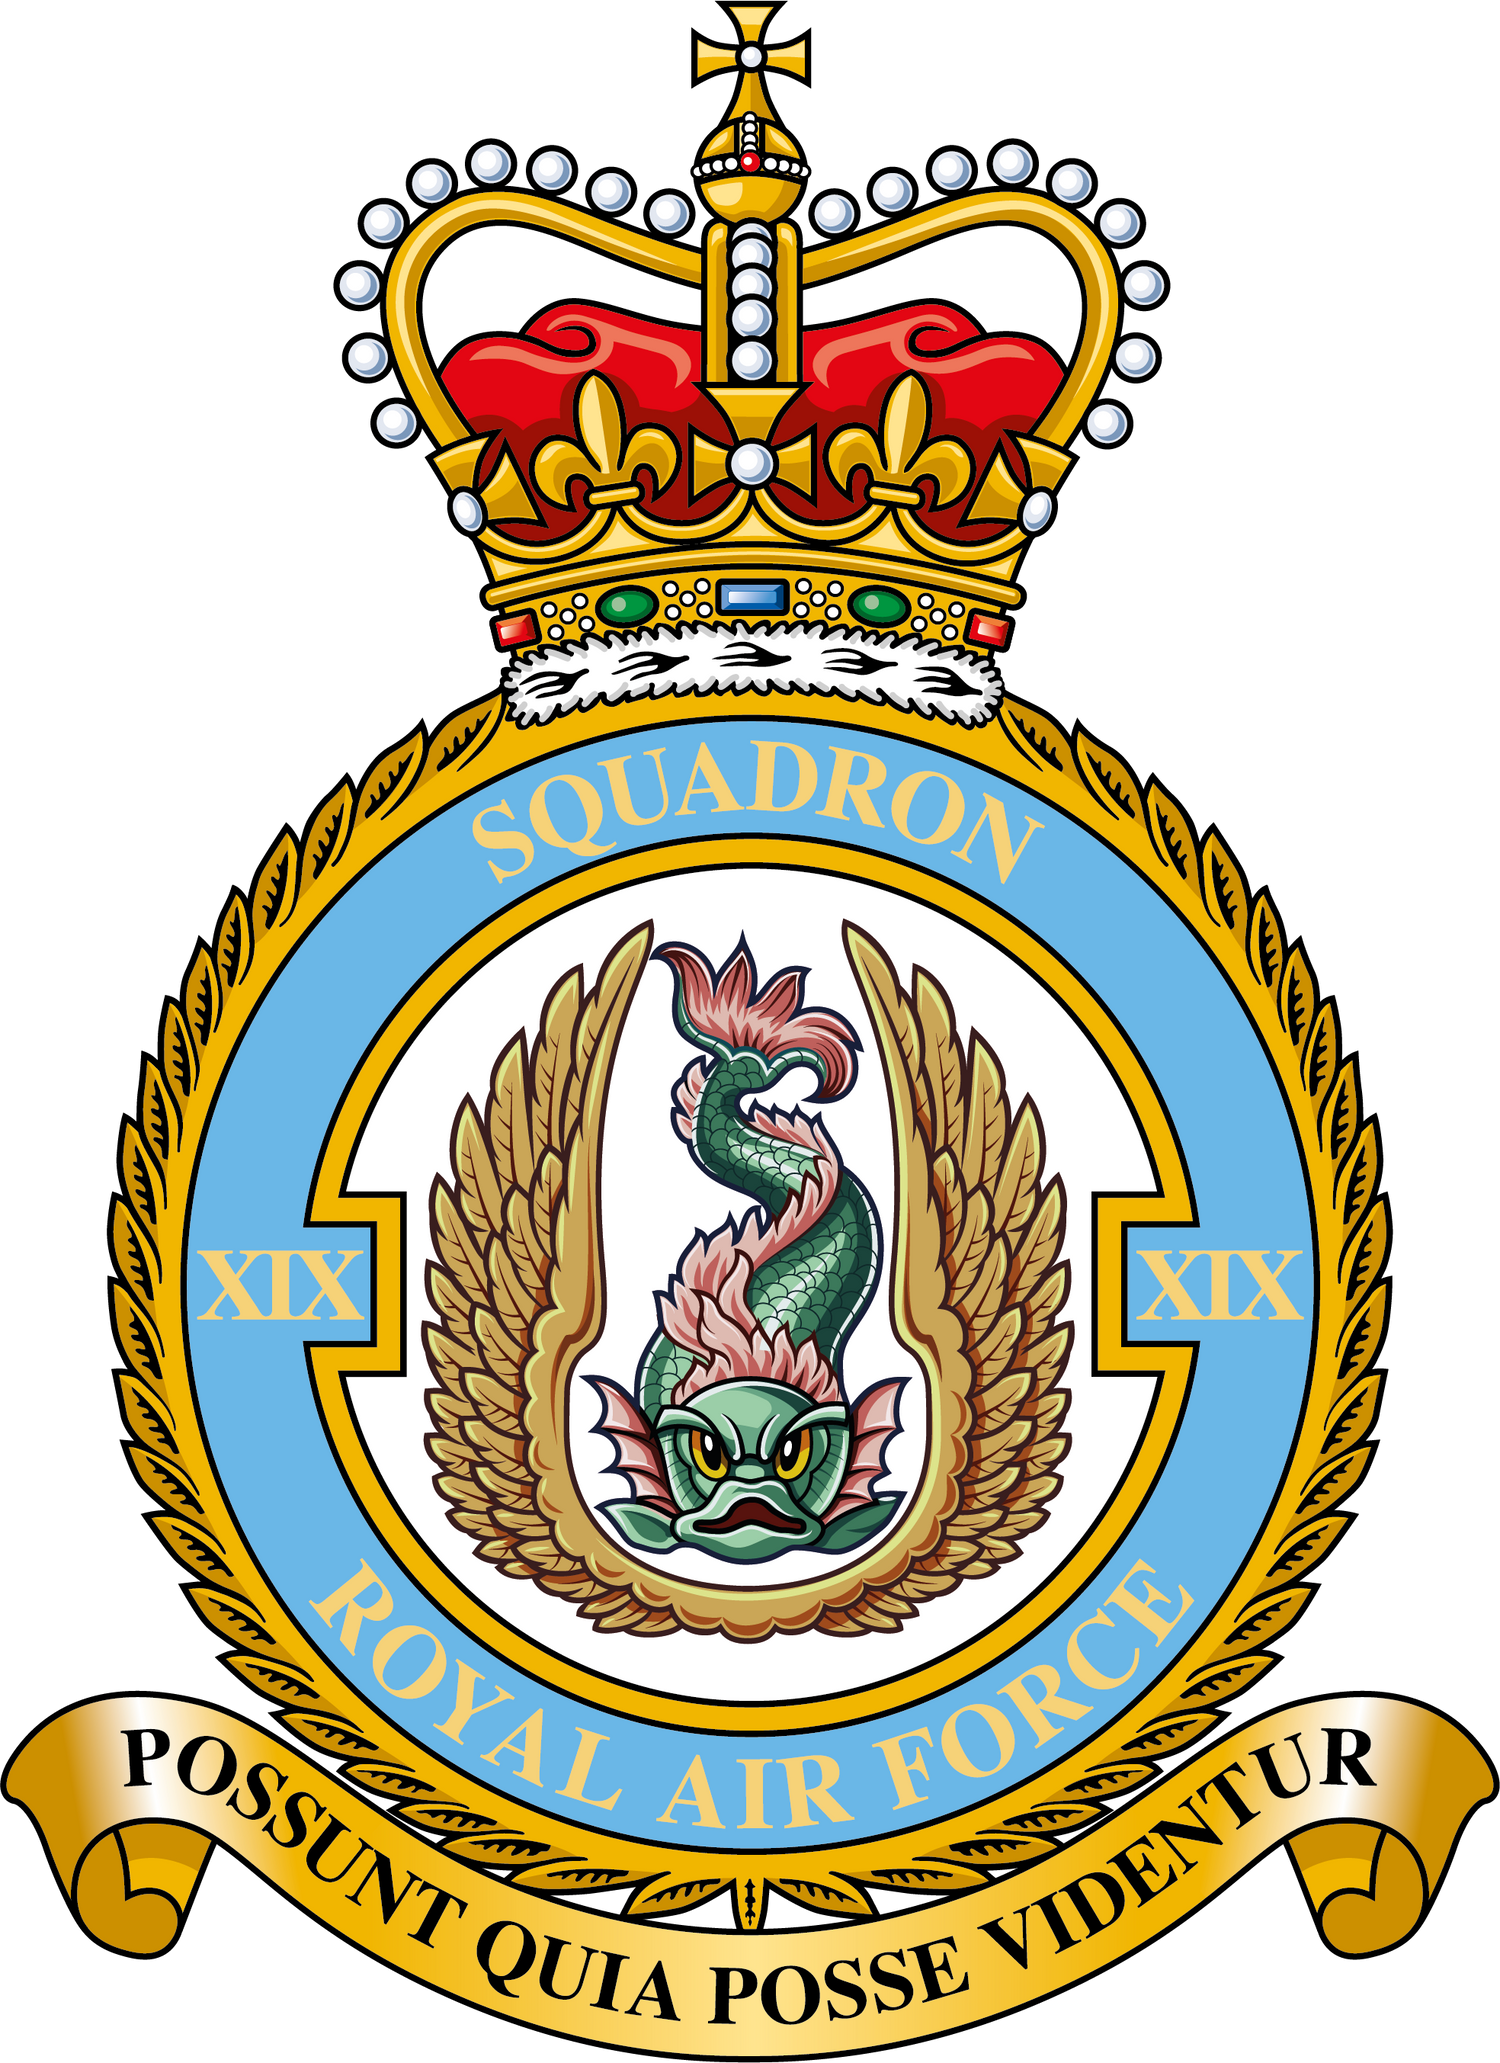 19 Squadron RAF